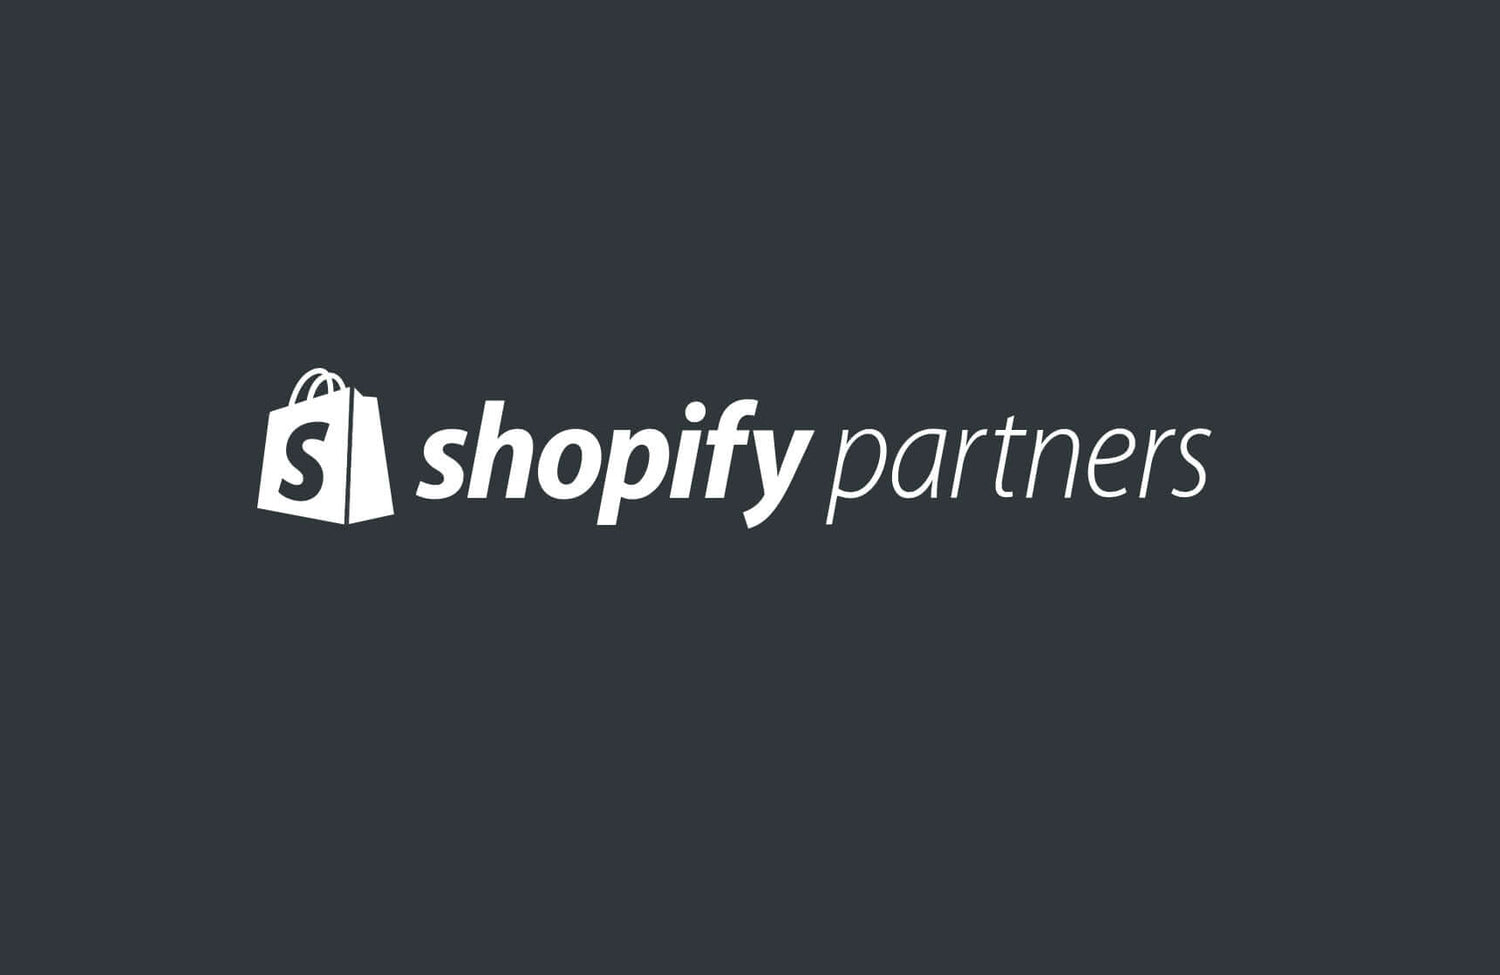 Shopify Speed Optimization Starter Pack